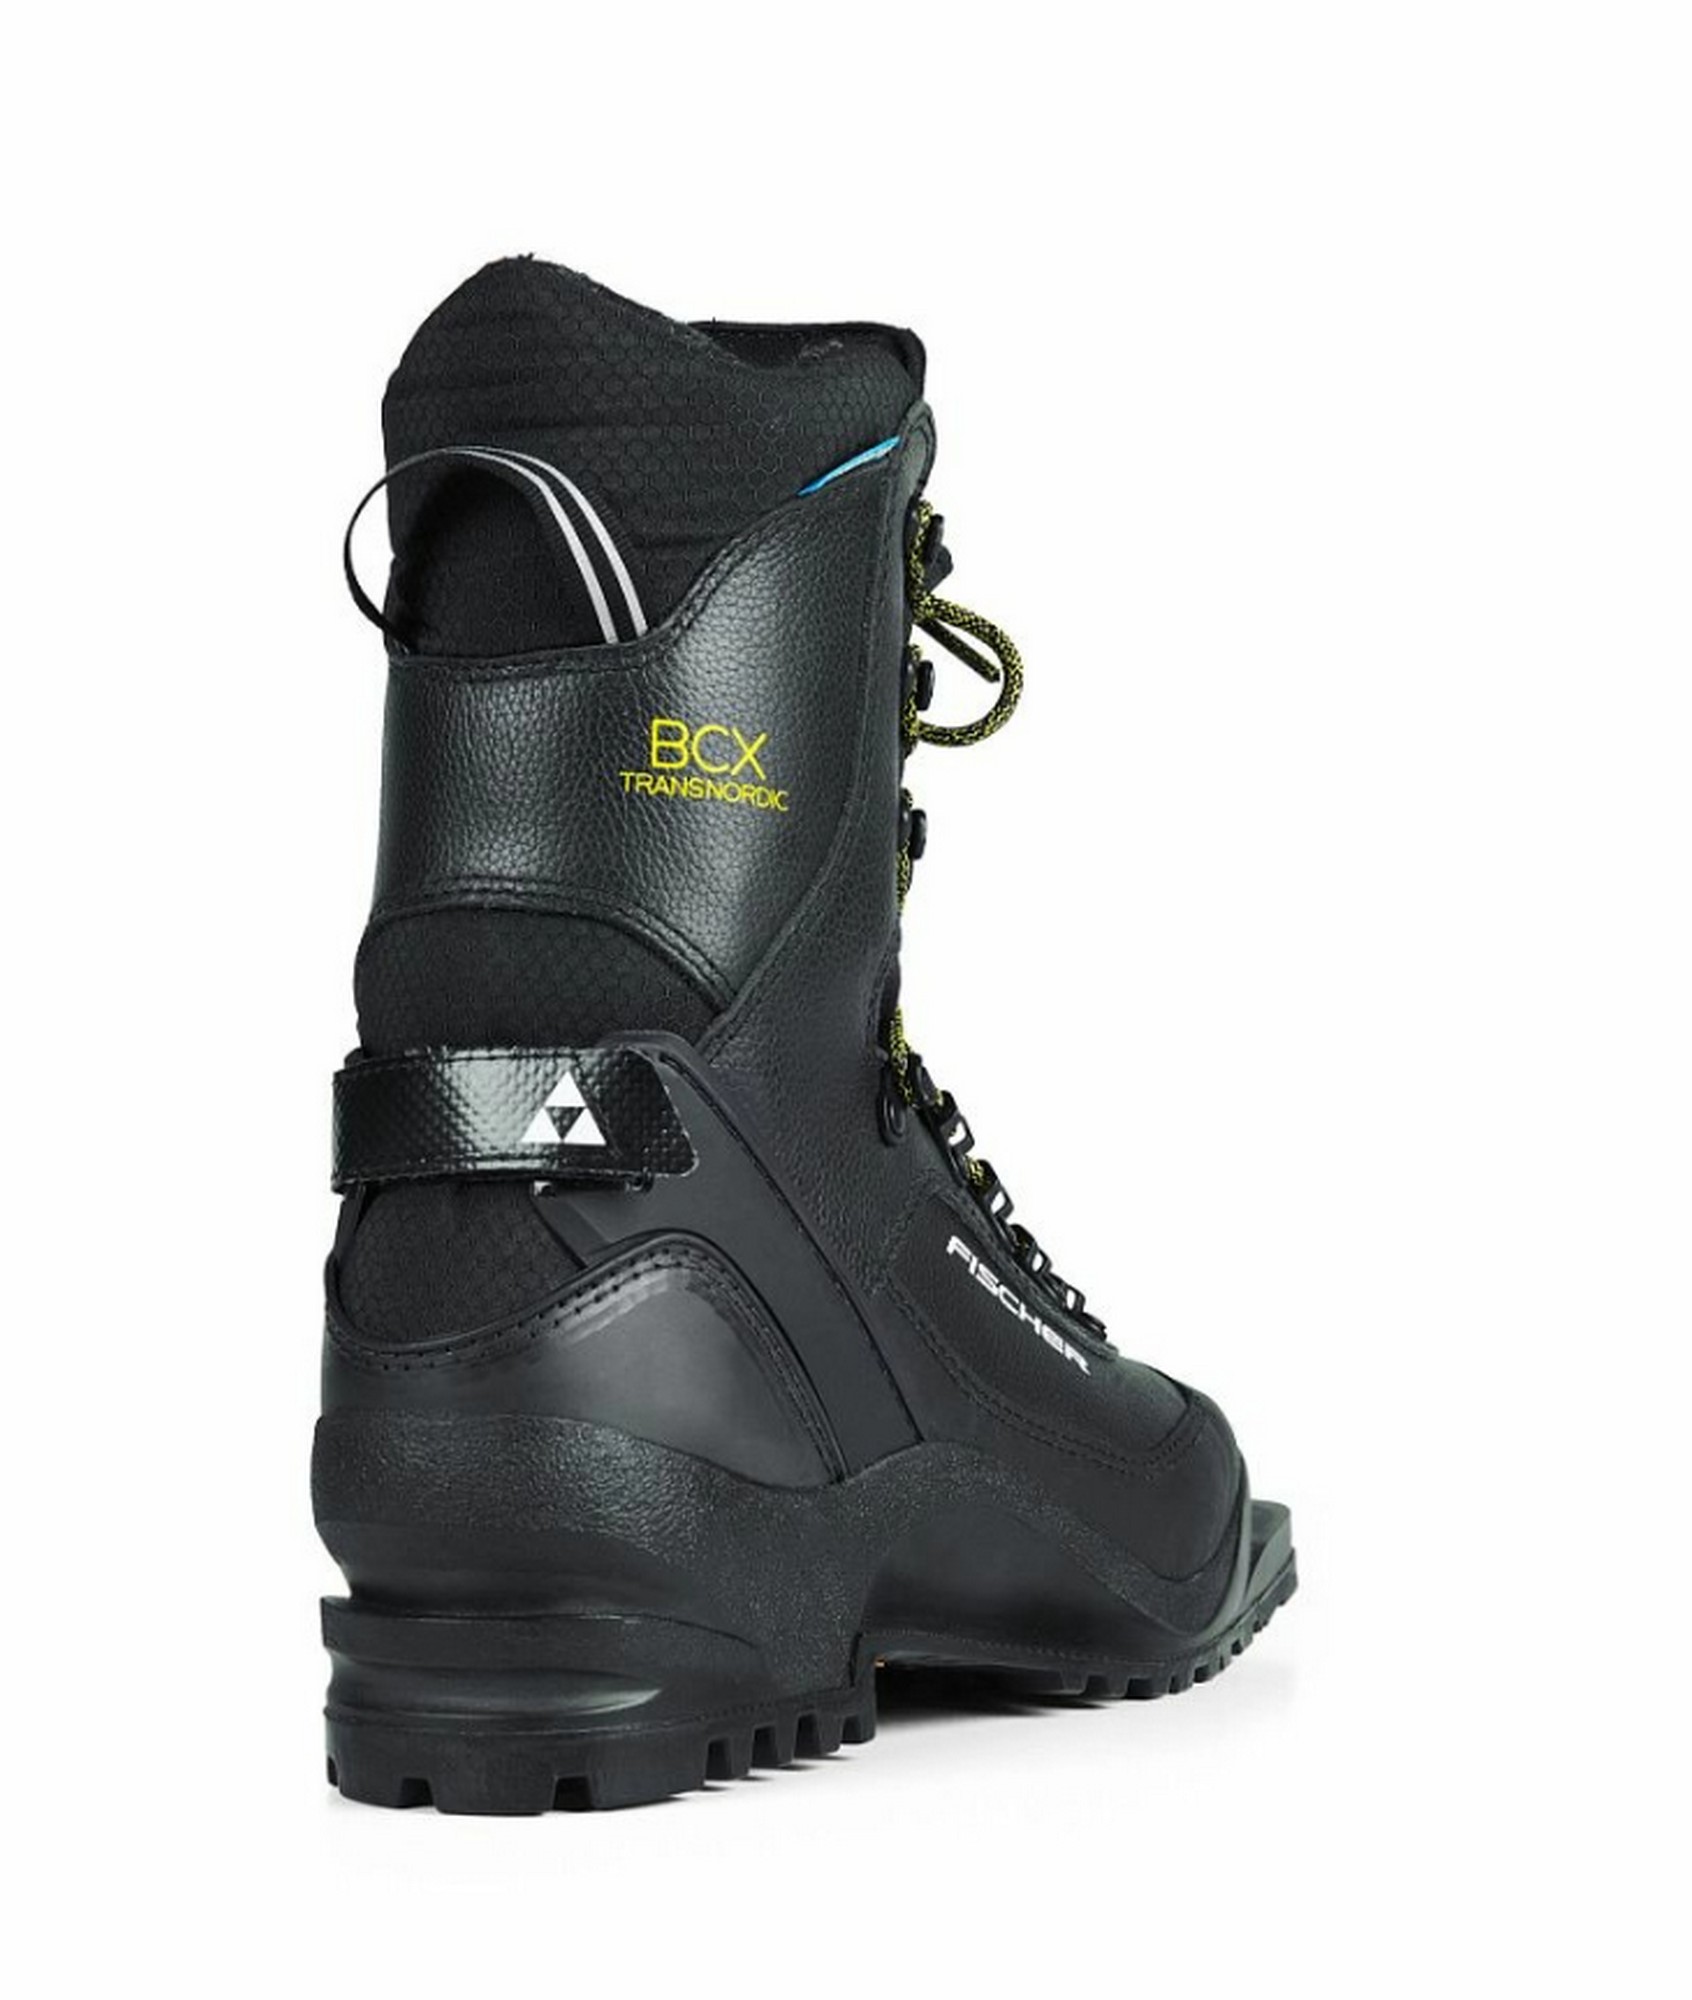 Лыжные ботинки Fischer NNN (BC) BCX Transnordic 75 Waterproof S37721 черный 1692_2000